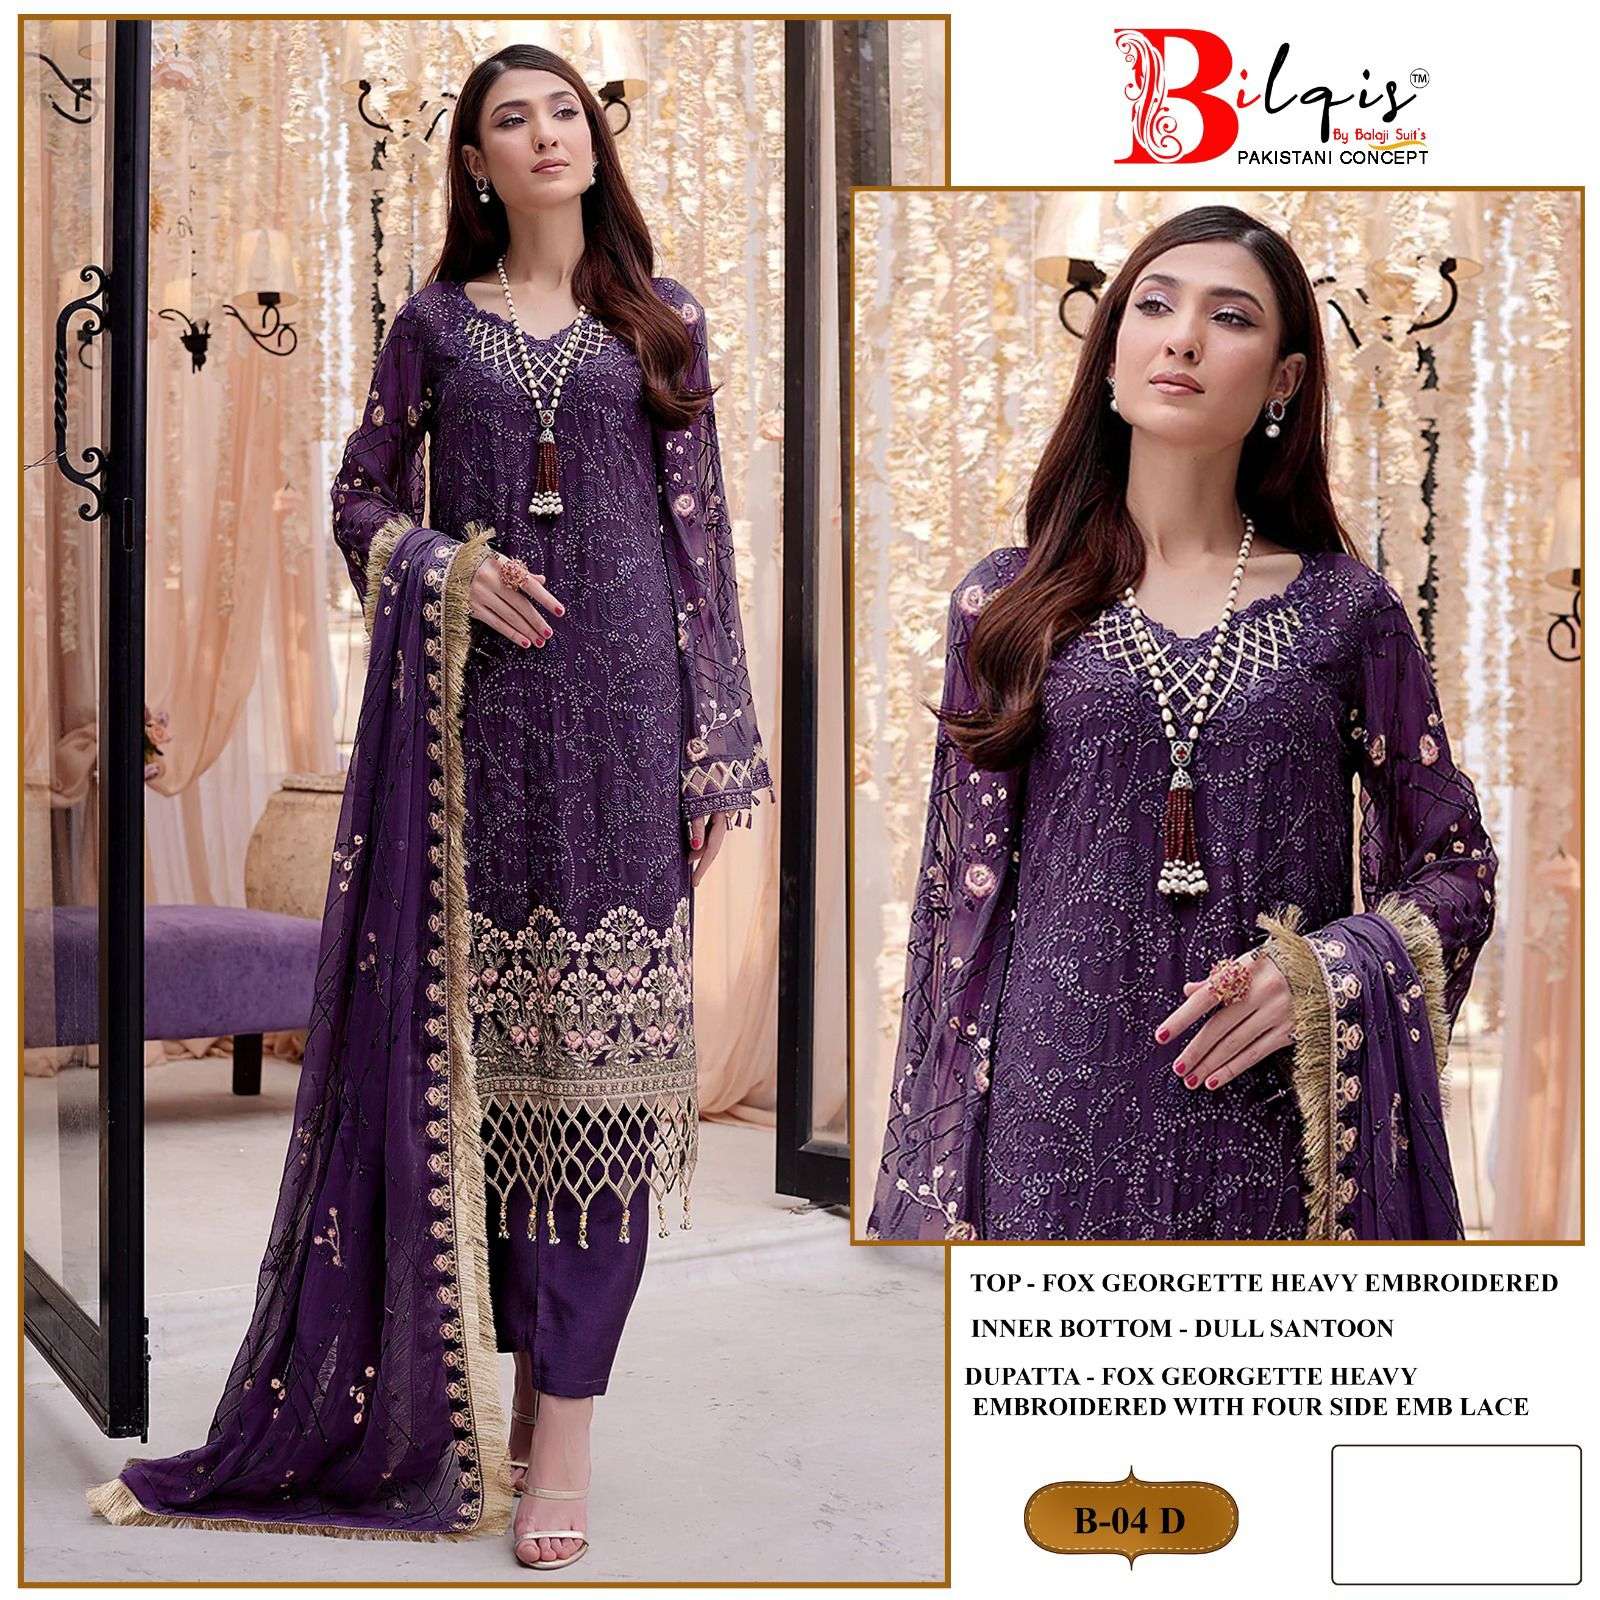 Bilqis B 04 Faux Georgette Embroidered Pakistani Suits Wholesale catalog